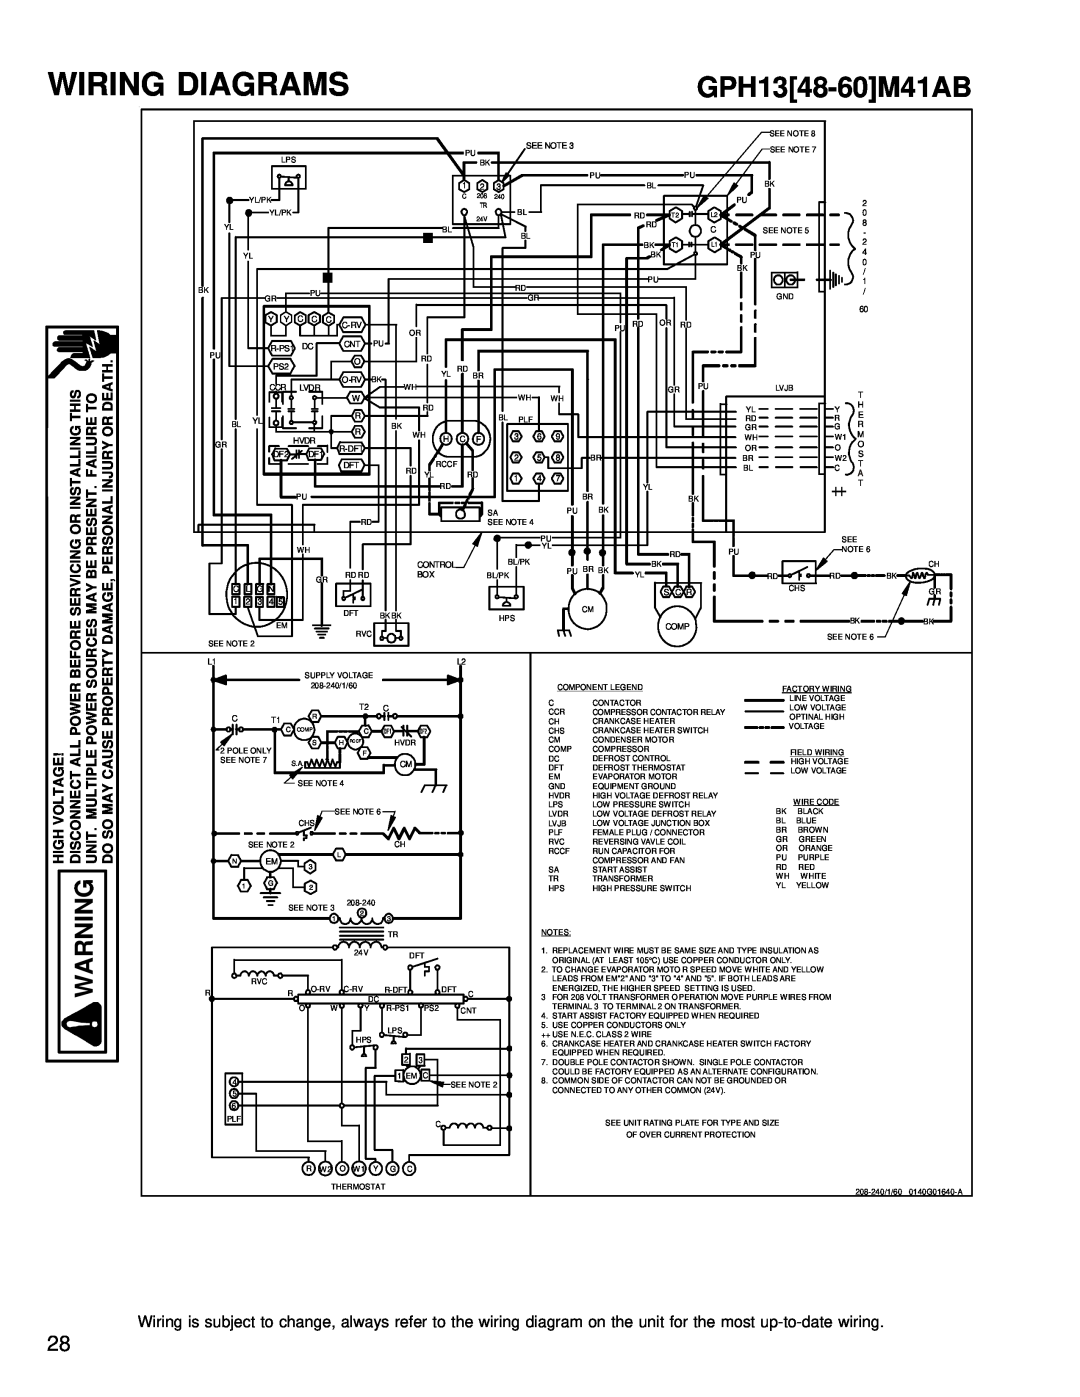 Goodman Mfg RT6332013r1 service manual GPH1348-60M41AB, Wiring Diagrams 